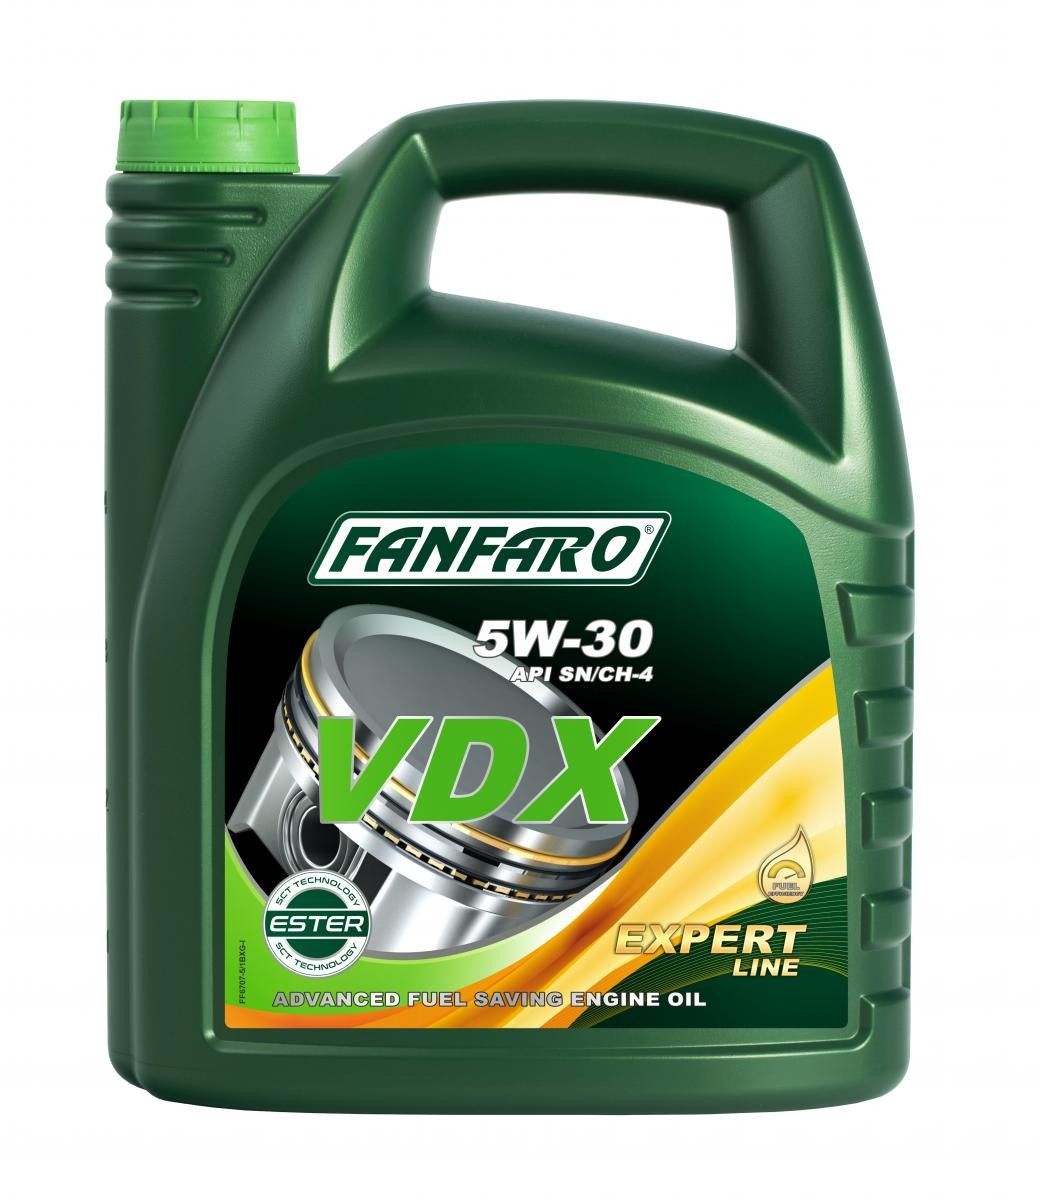 Comprar Aceite motor FANFARO FF6707-5 Expert Line, VDX 5W-30, 5L, Aceite sintetico